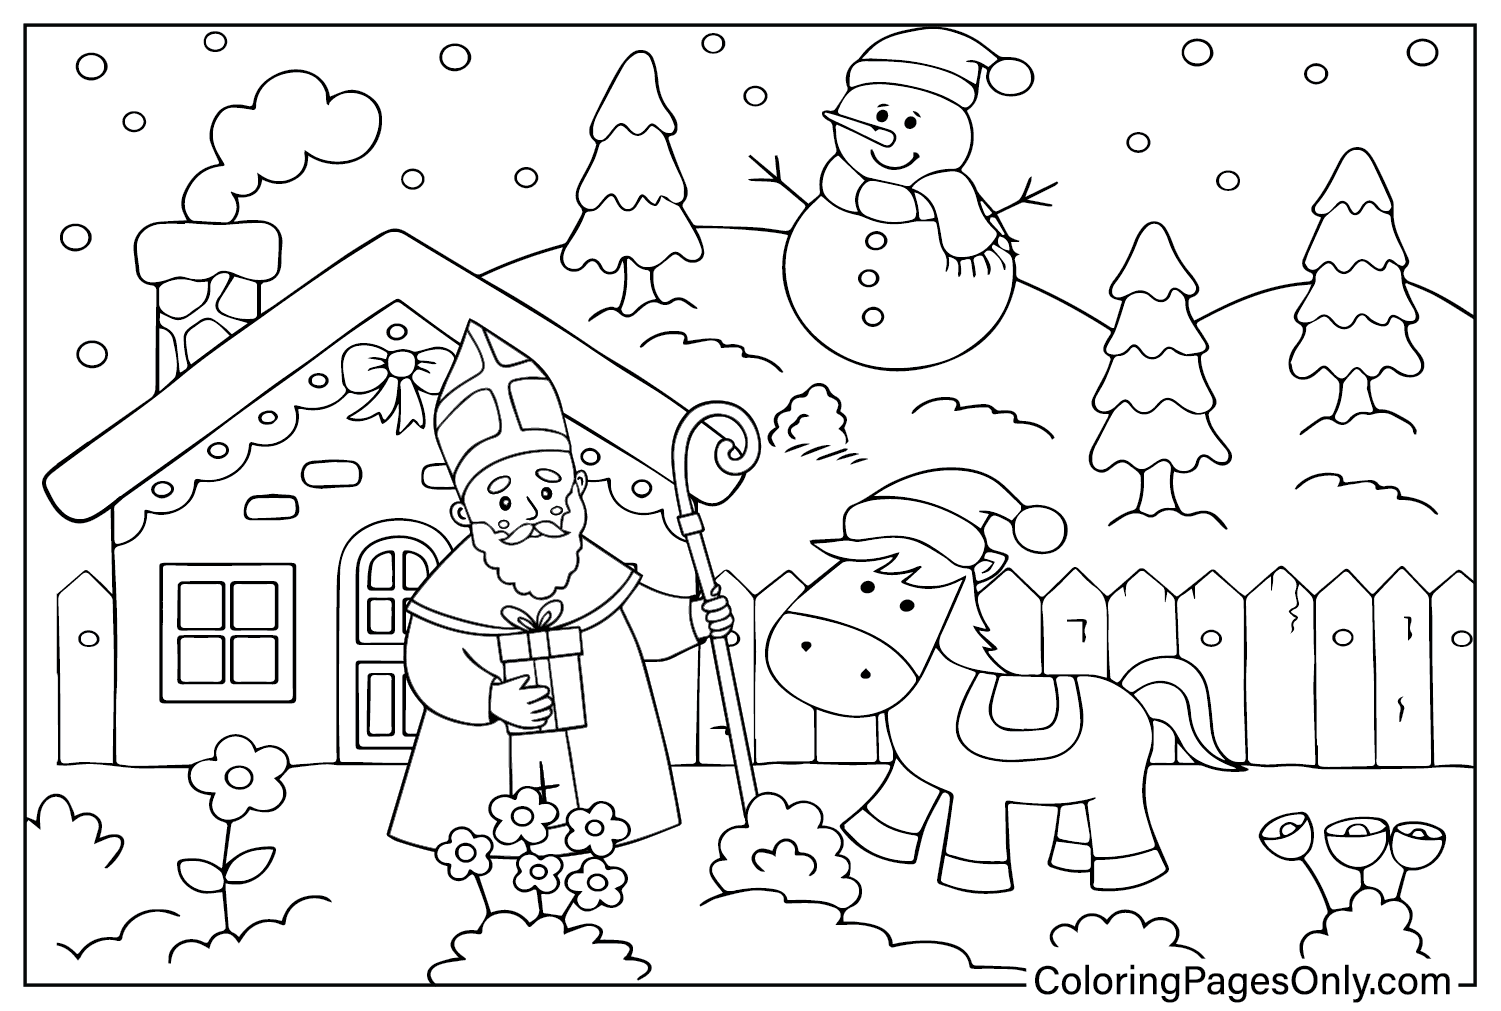 Saint Nicholas Day Coloring Page to Printable - Free Printable Coloring ...